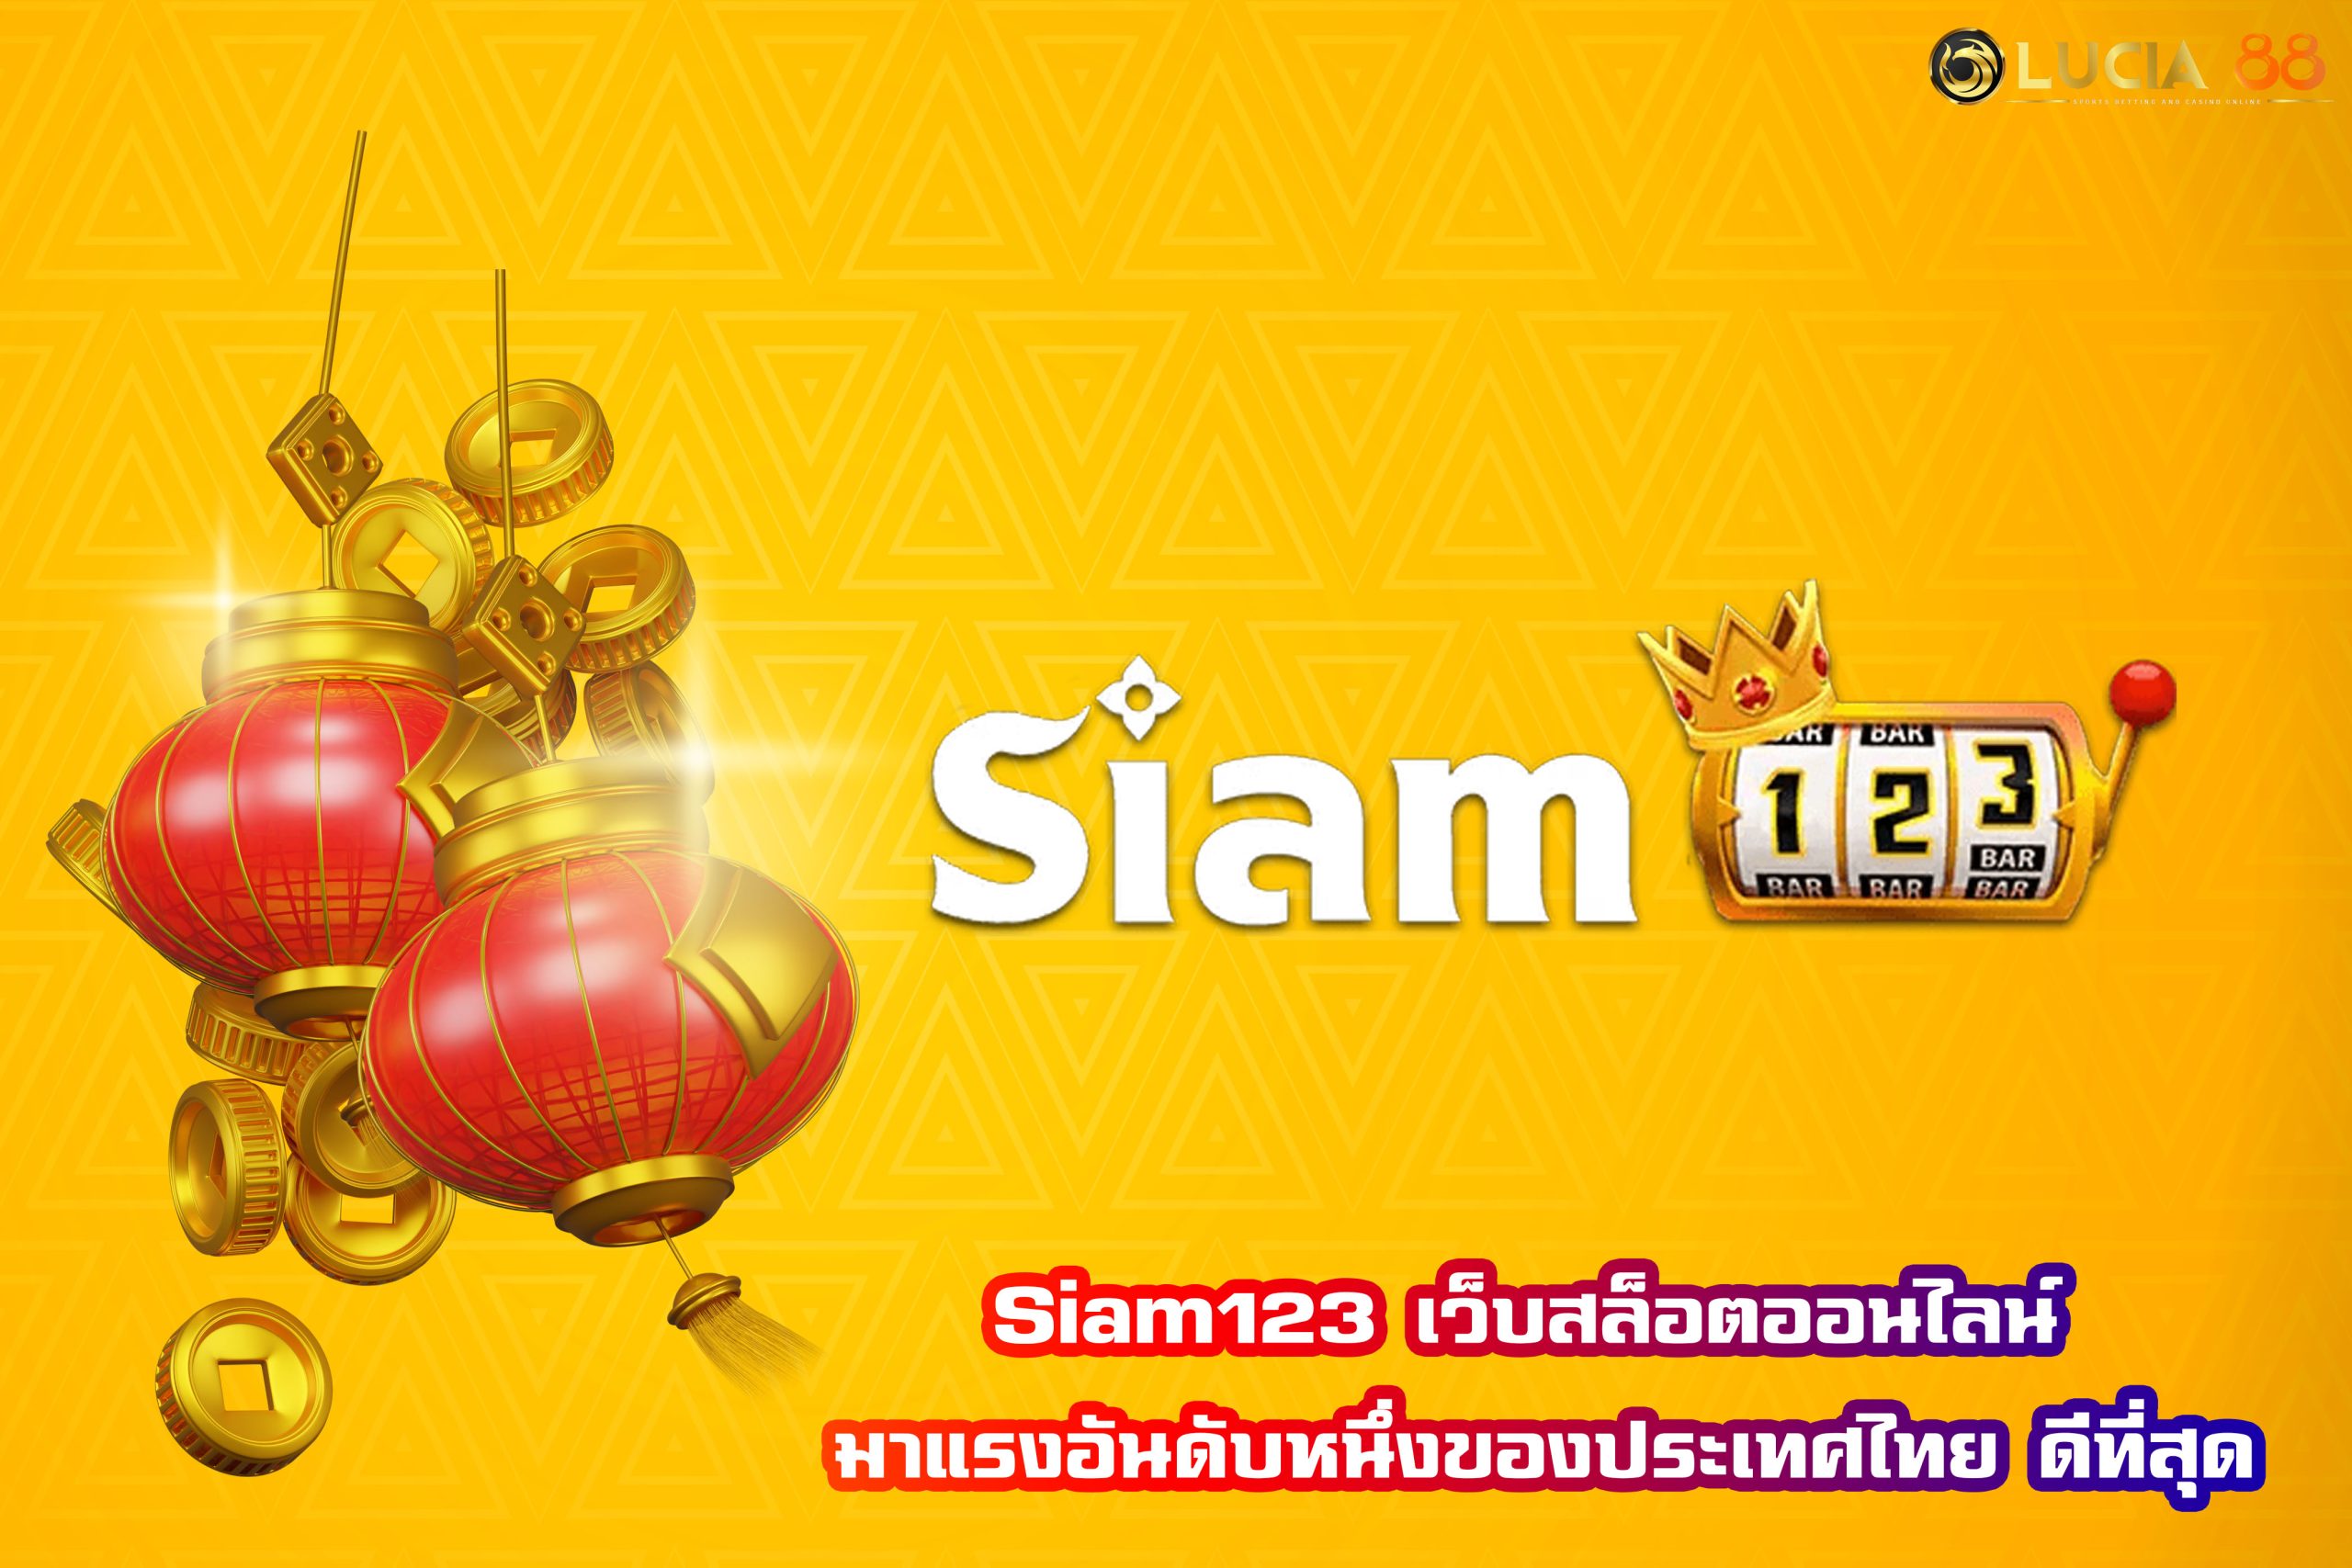 Siam123 เว็บสล็อตออนไลน์ มาแรงอันดับหนึ่งของประเทศไทย ดีที่สุด